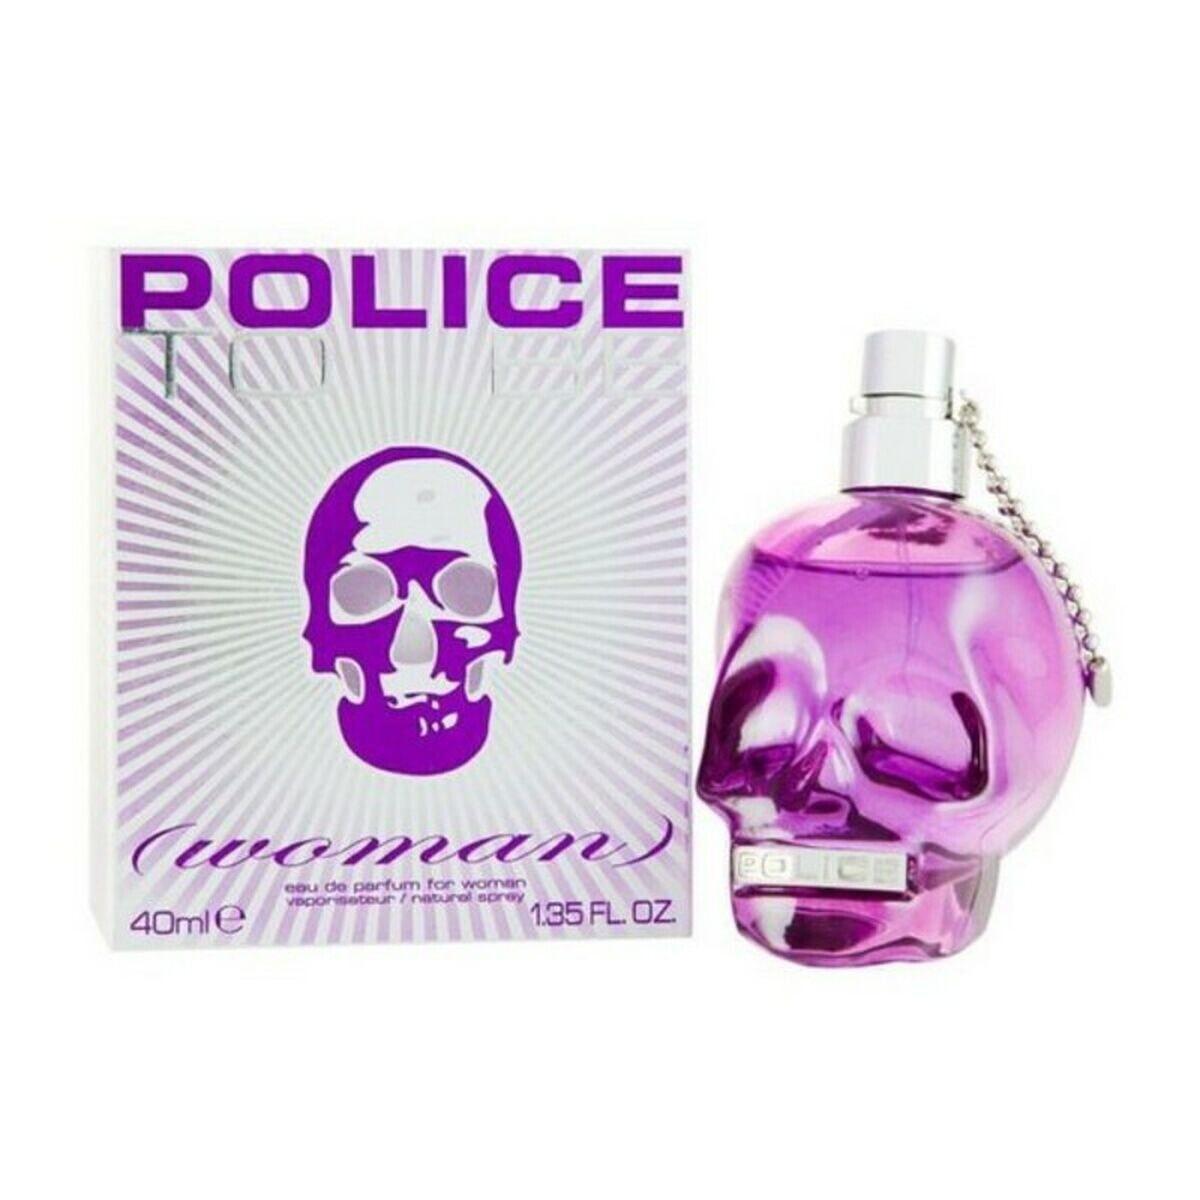 Женская парфюмерия To Be Police EDP (40 ml) (40 ml)